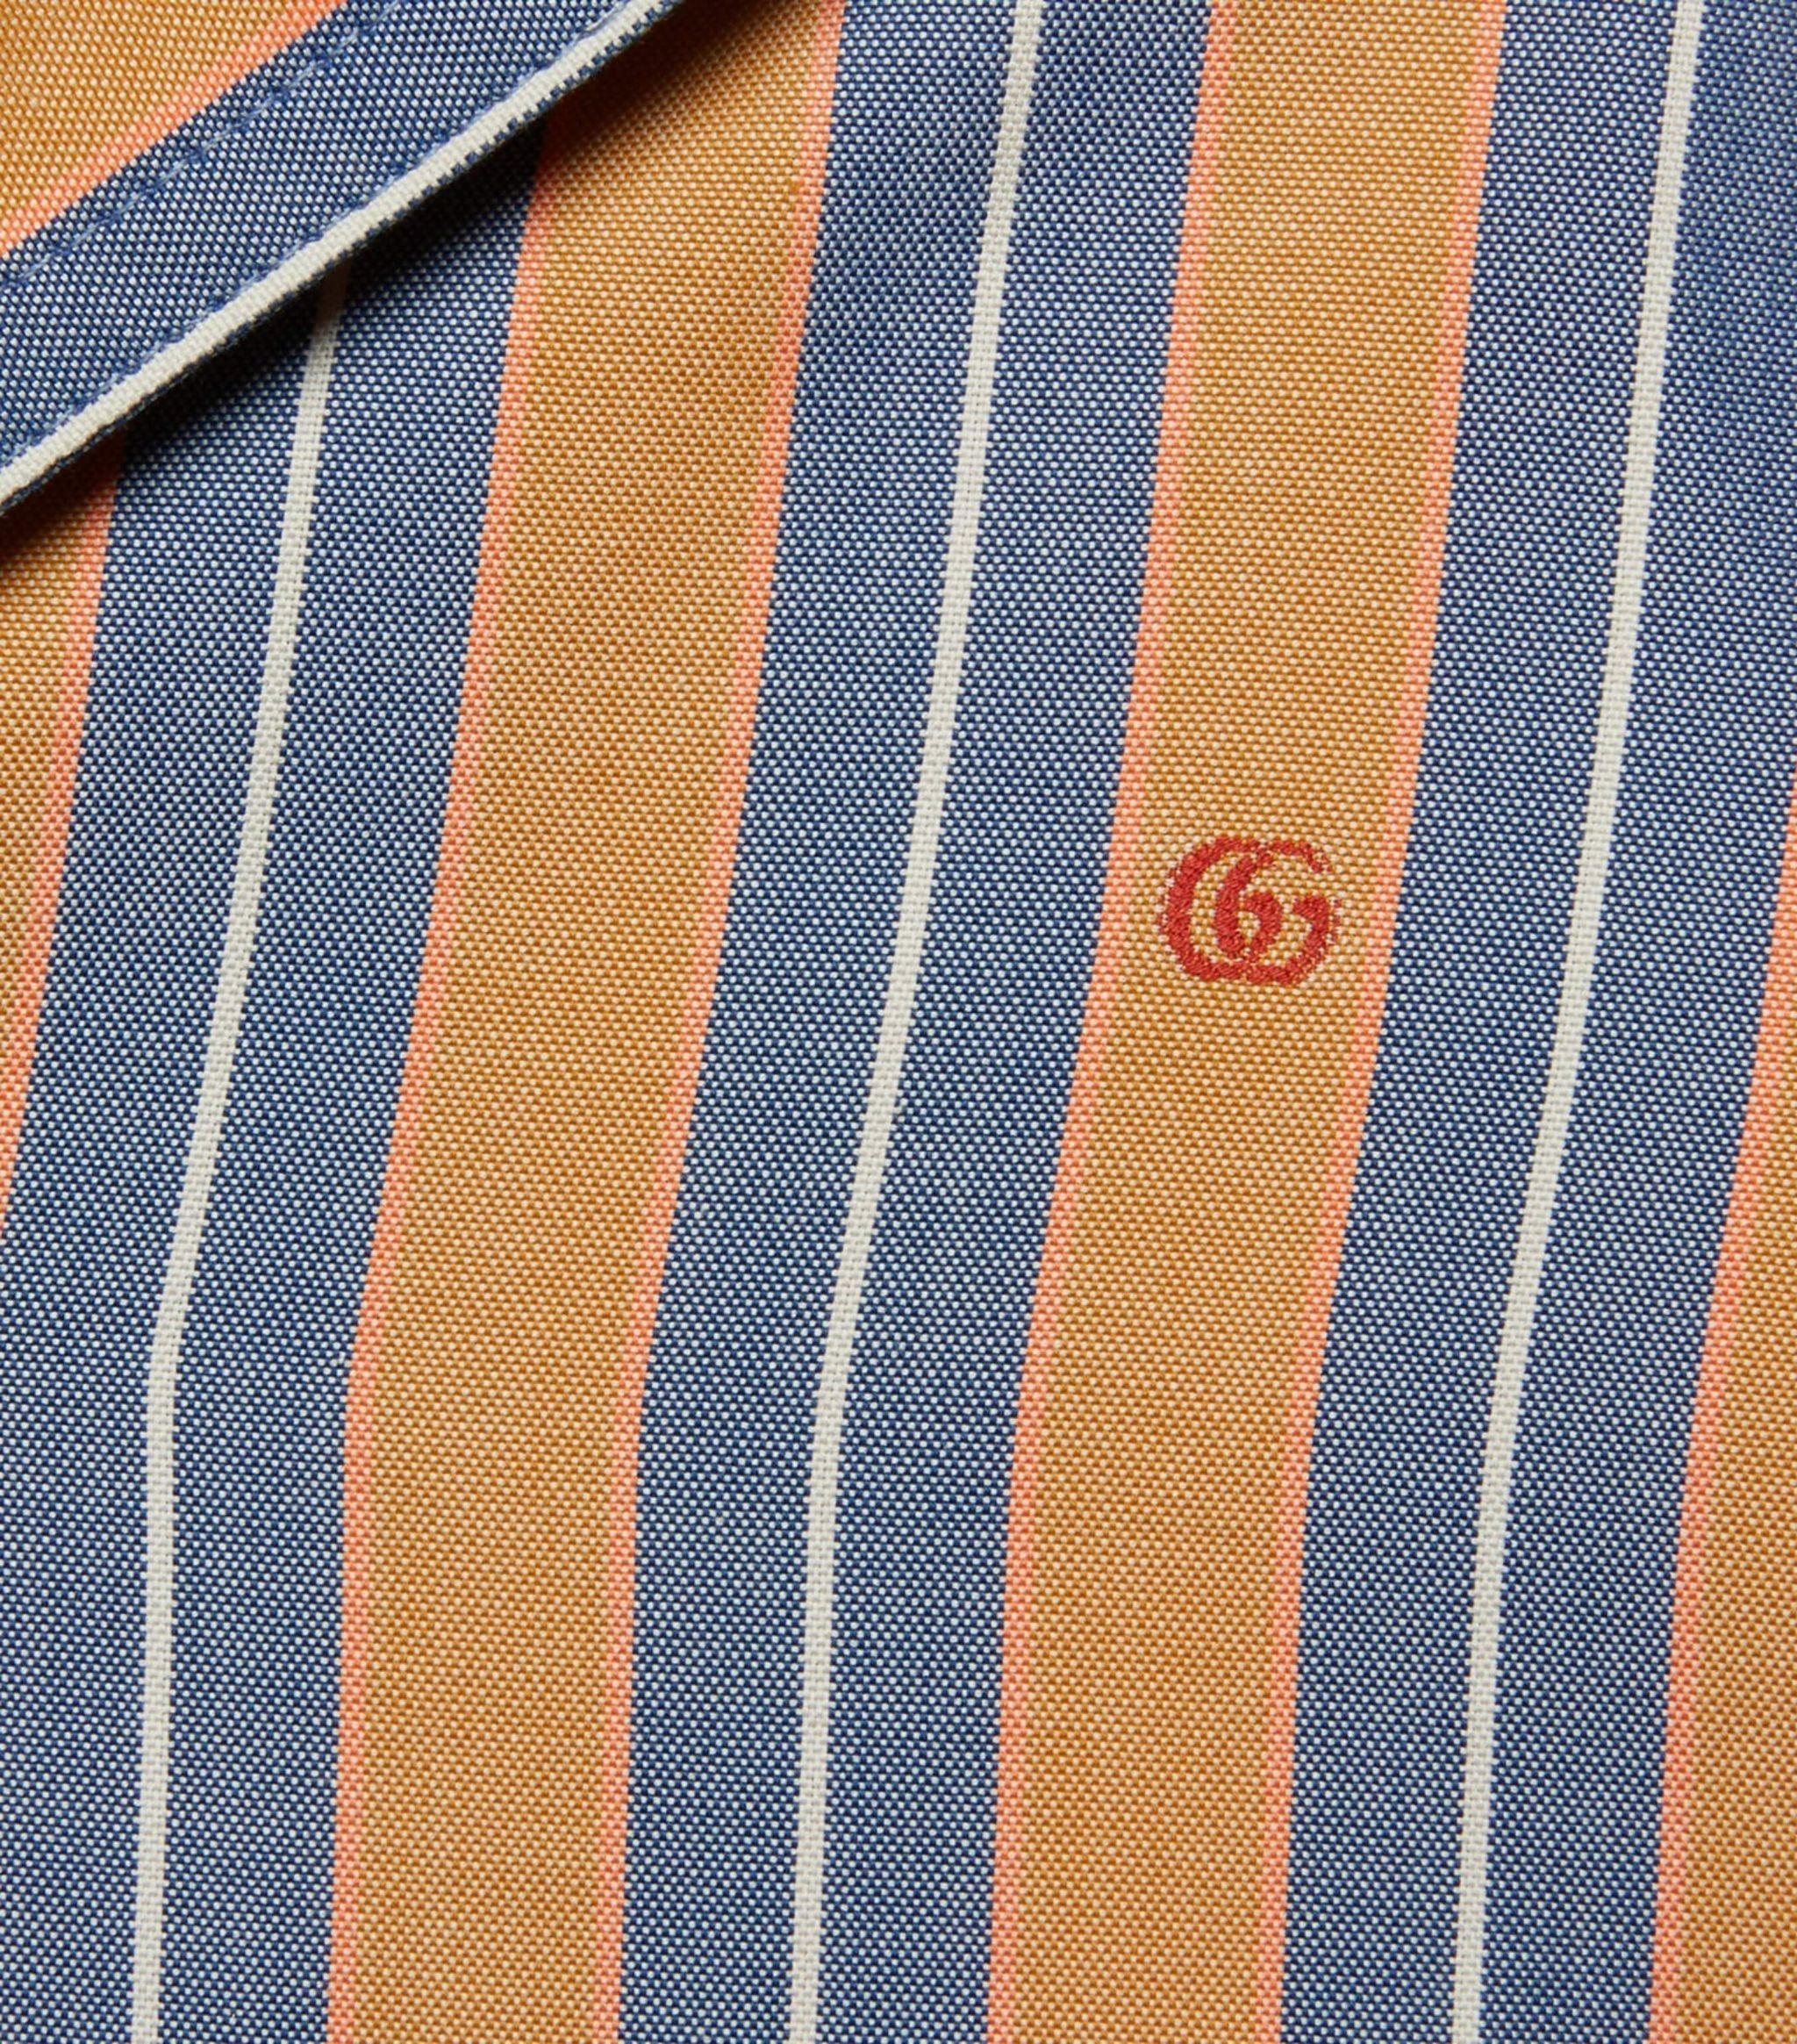 Stripe Oxford Shirt (4-12 Years) Miscellaneous Harrods   